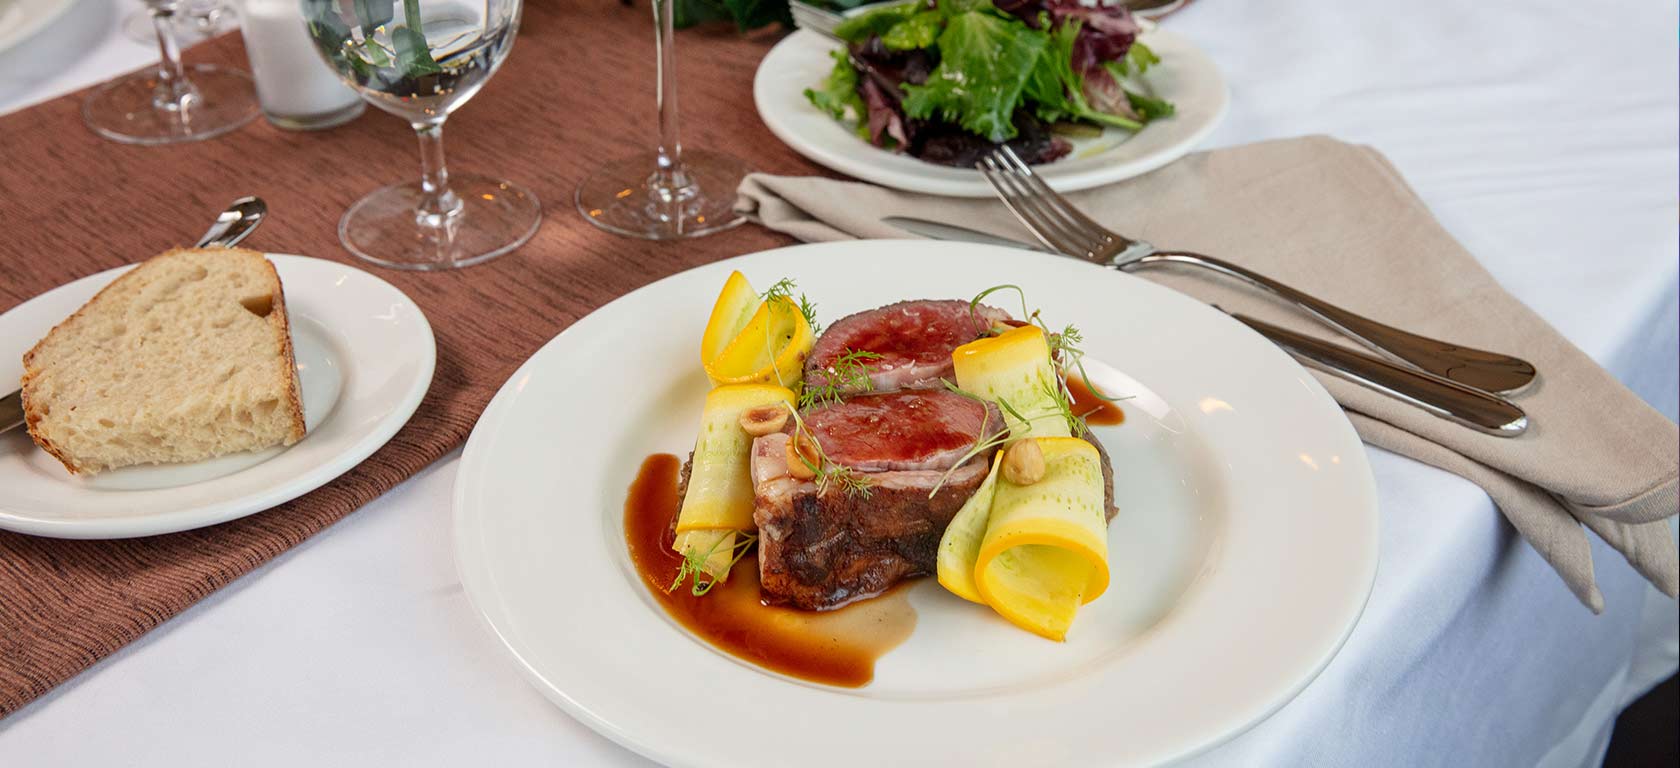 Beautifully plated rare steak on elegant white ceramic plate.